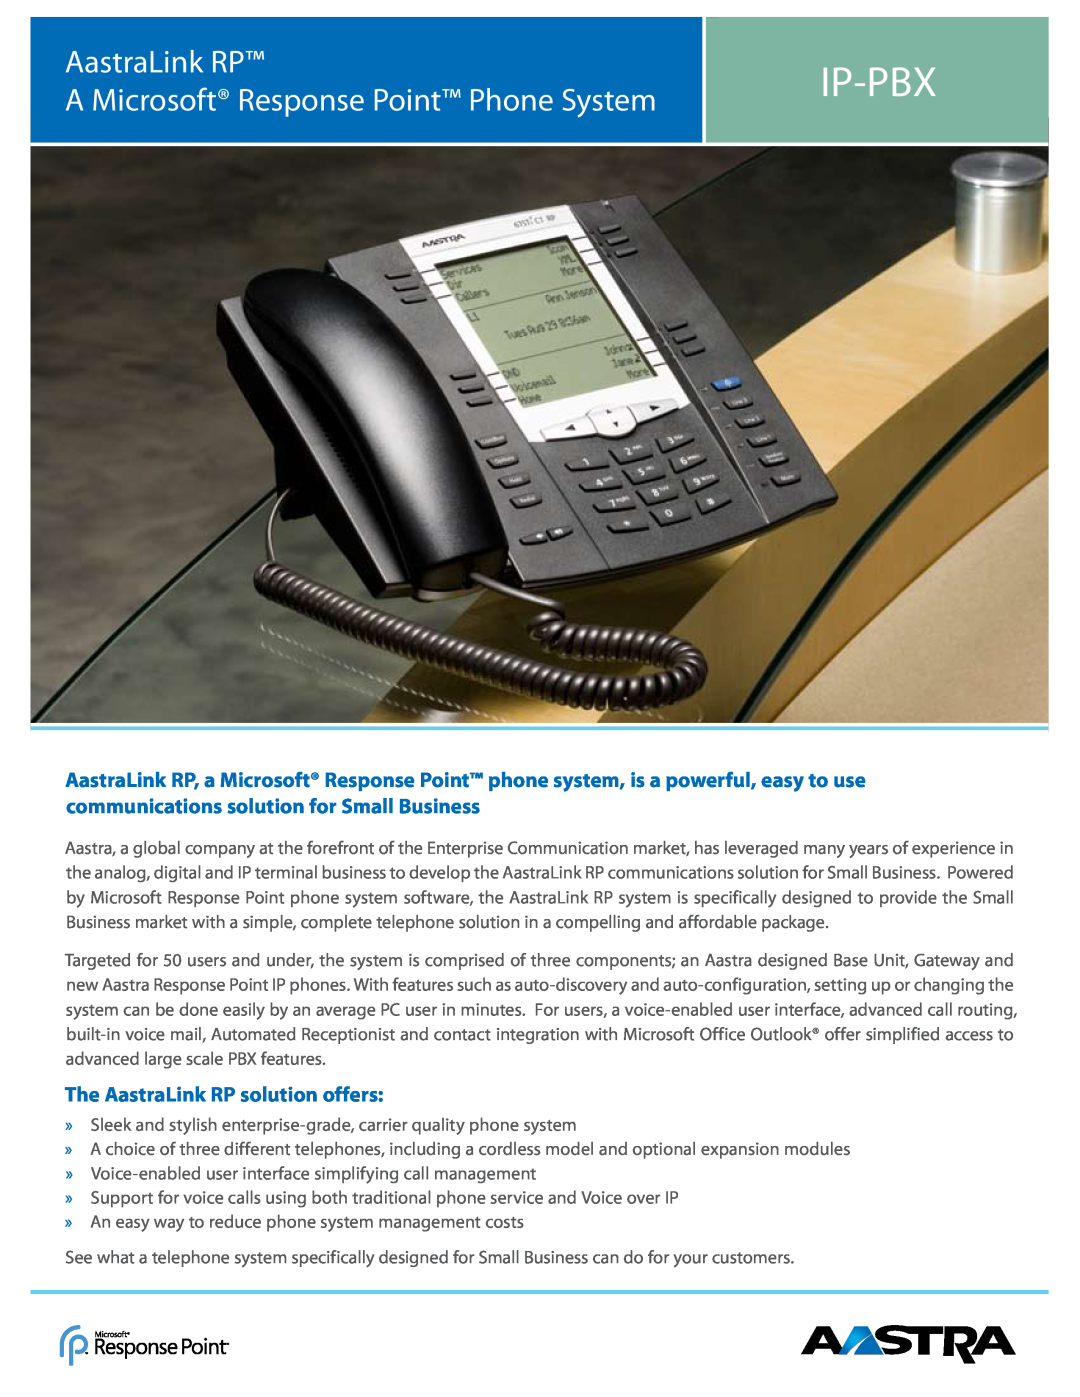 Aastra Telecom IP-PBX manual AastraLink RP A Microsoft Response Point Phone System, Ip-Pbx 